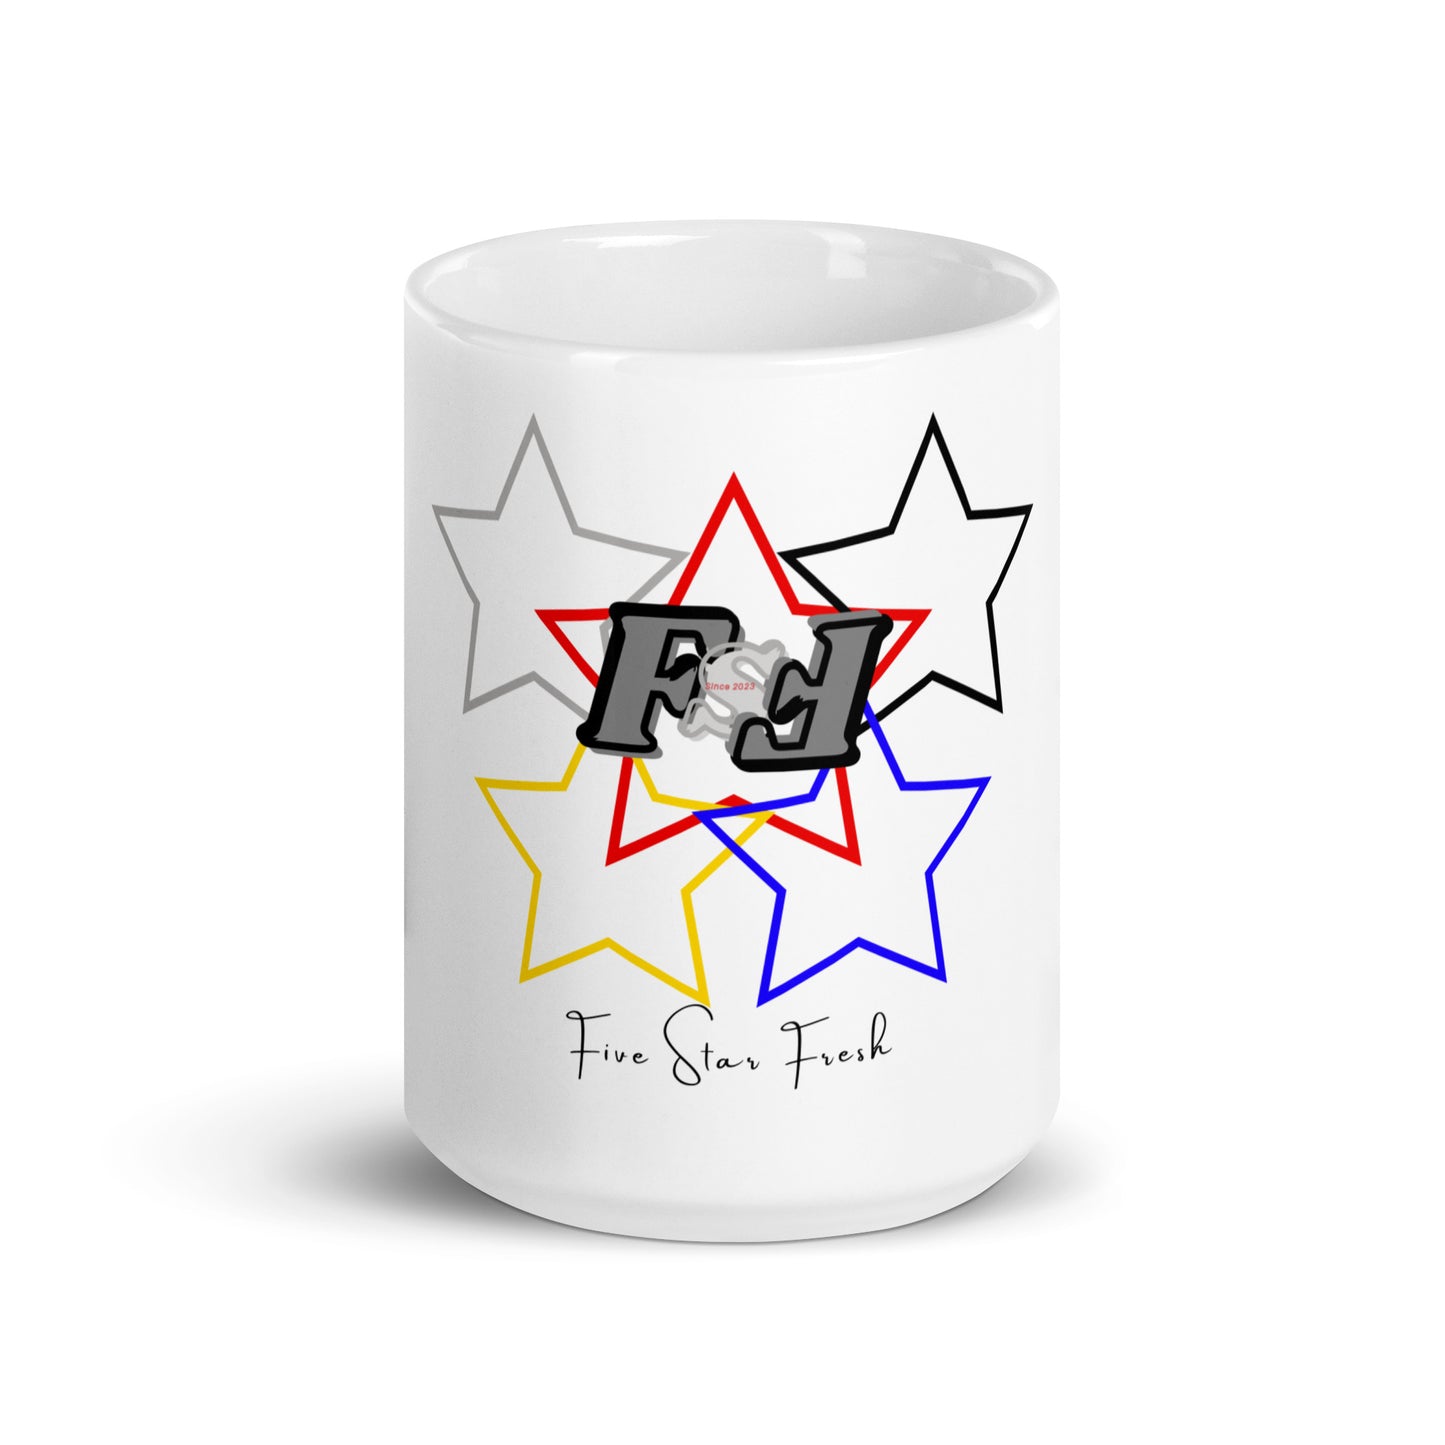 'Starz' Bright - Five Star Fresh White glossy mug